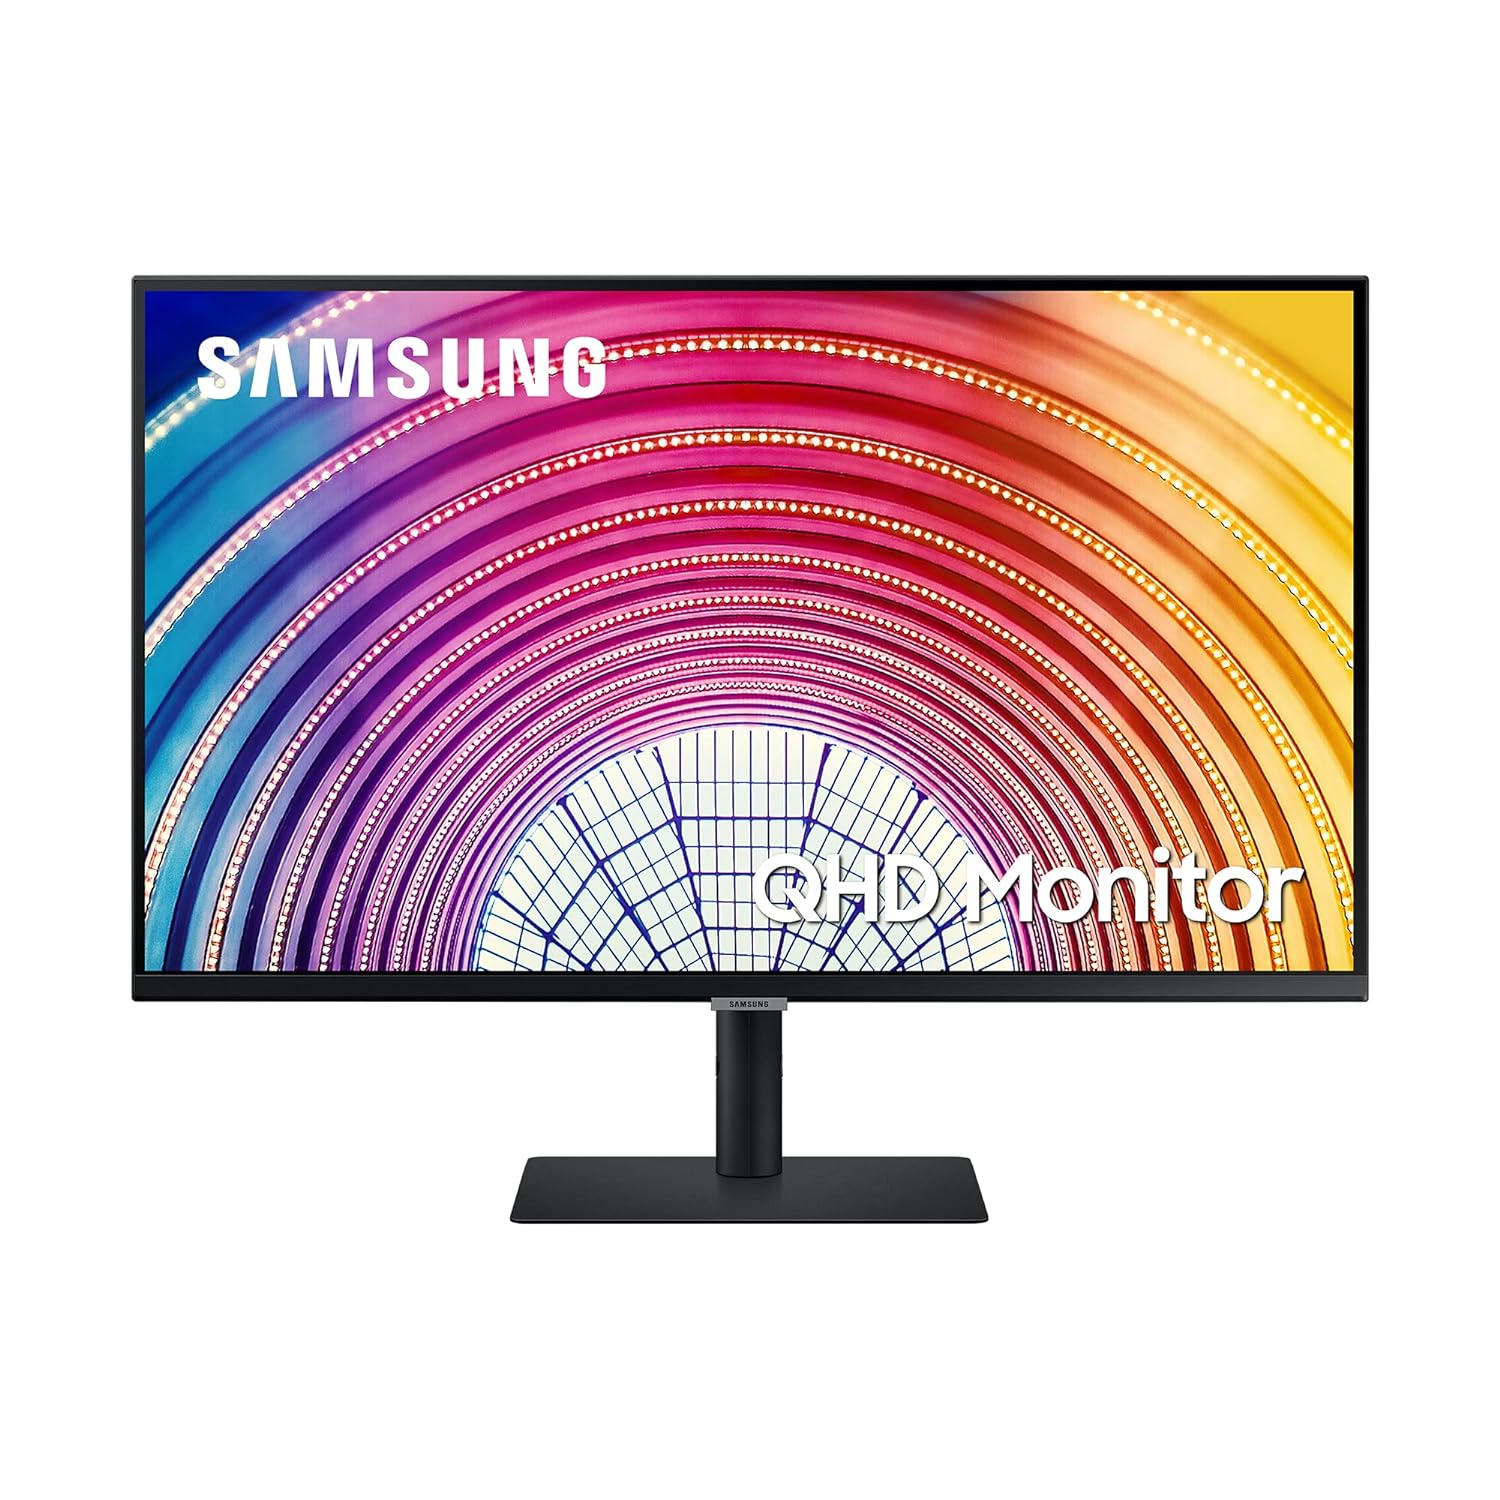 Samsung 32 inches A600N  QHD Monitor | Smart Design | Intelligent Eye Care, AMD FreeSync™ | Energy Saving Monitor